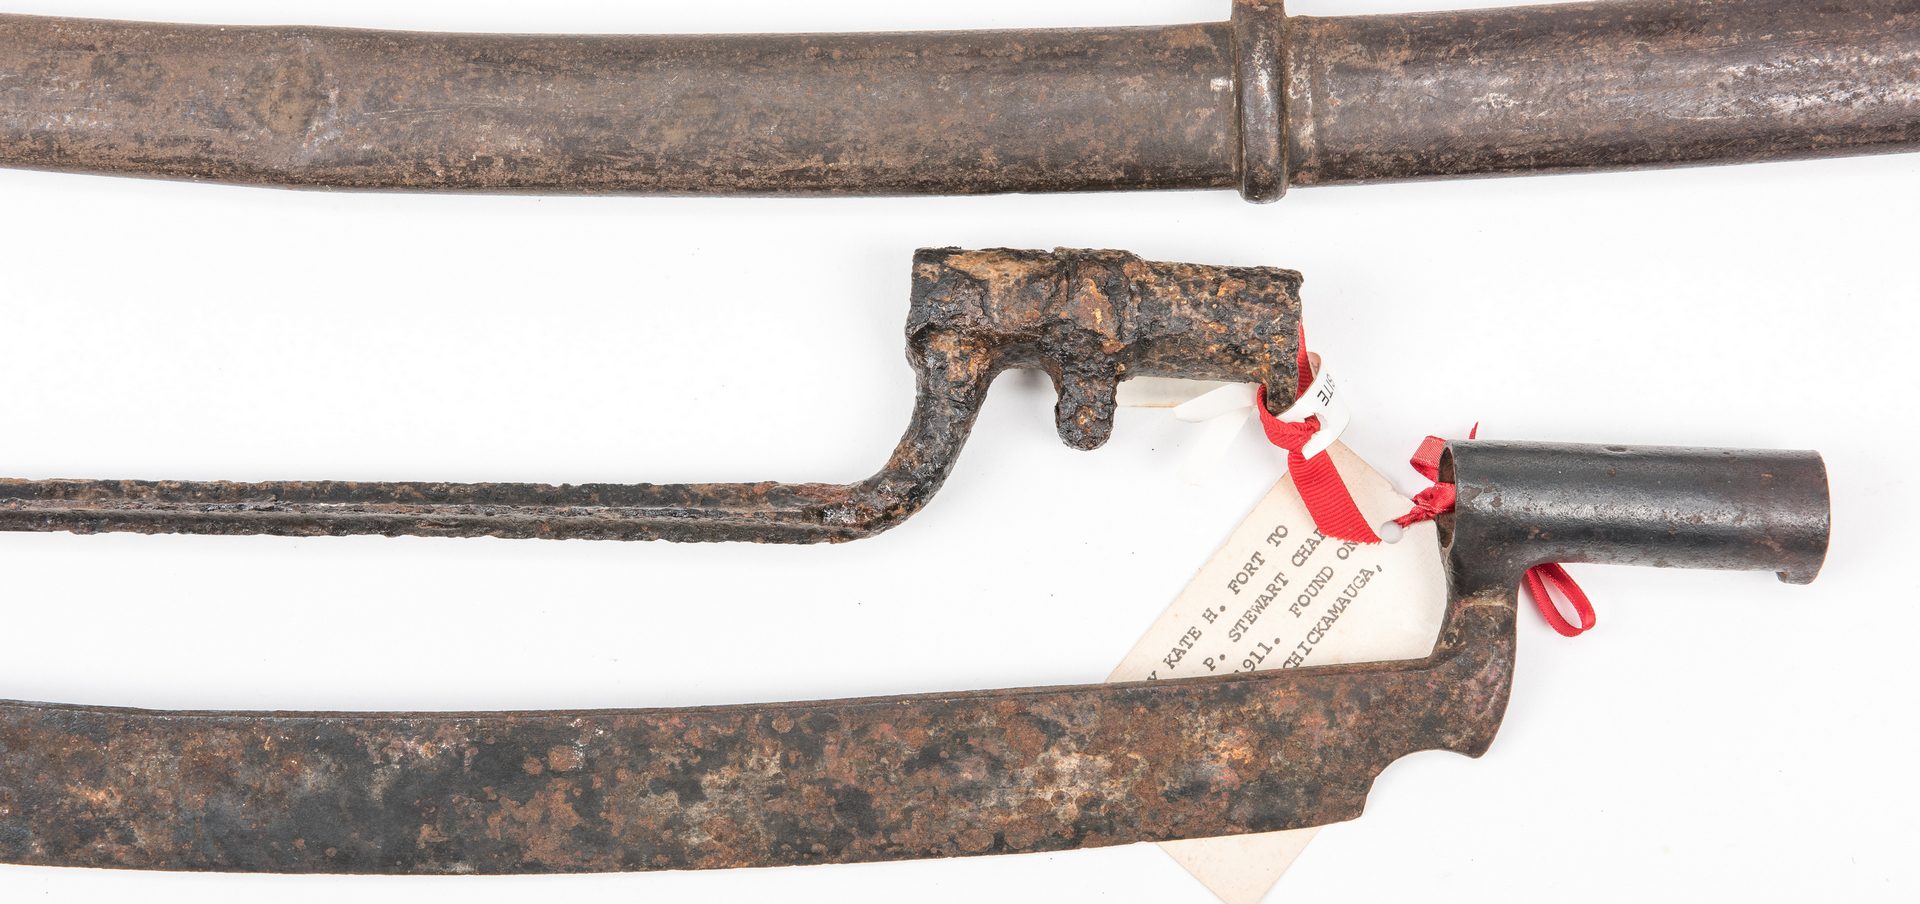 Lot 530: 5 Civil War Edged Weapons, inc. Wristbreaker, Some Relic